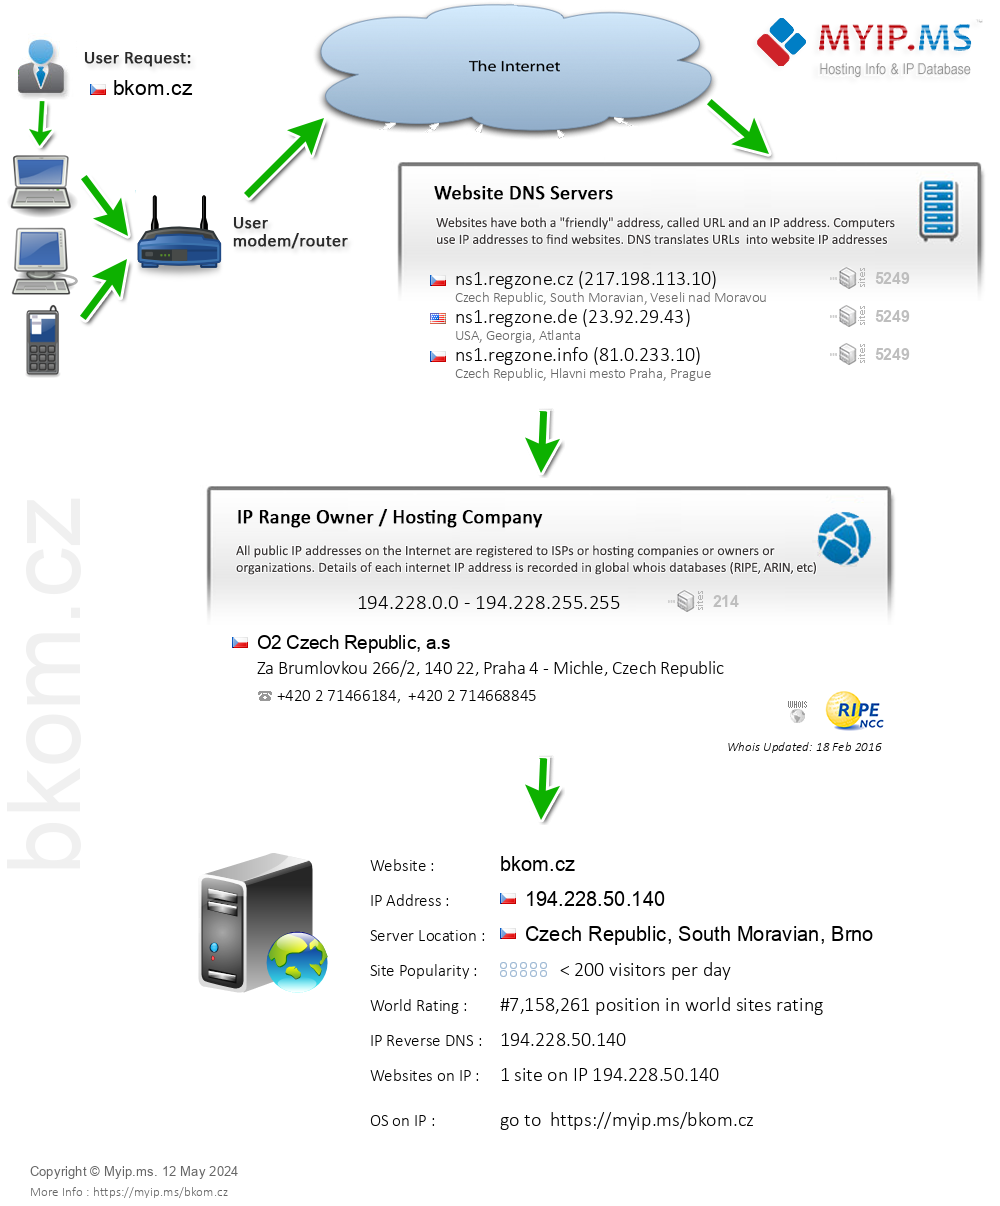 Bkom.cz - Website Hosting Visual IP Diagram